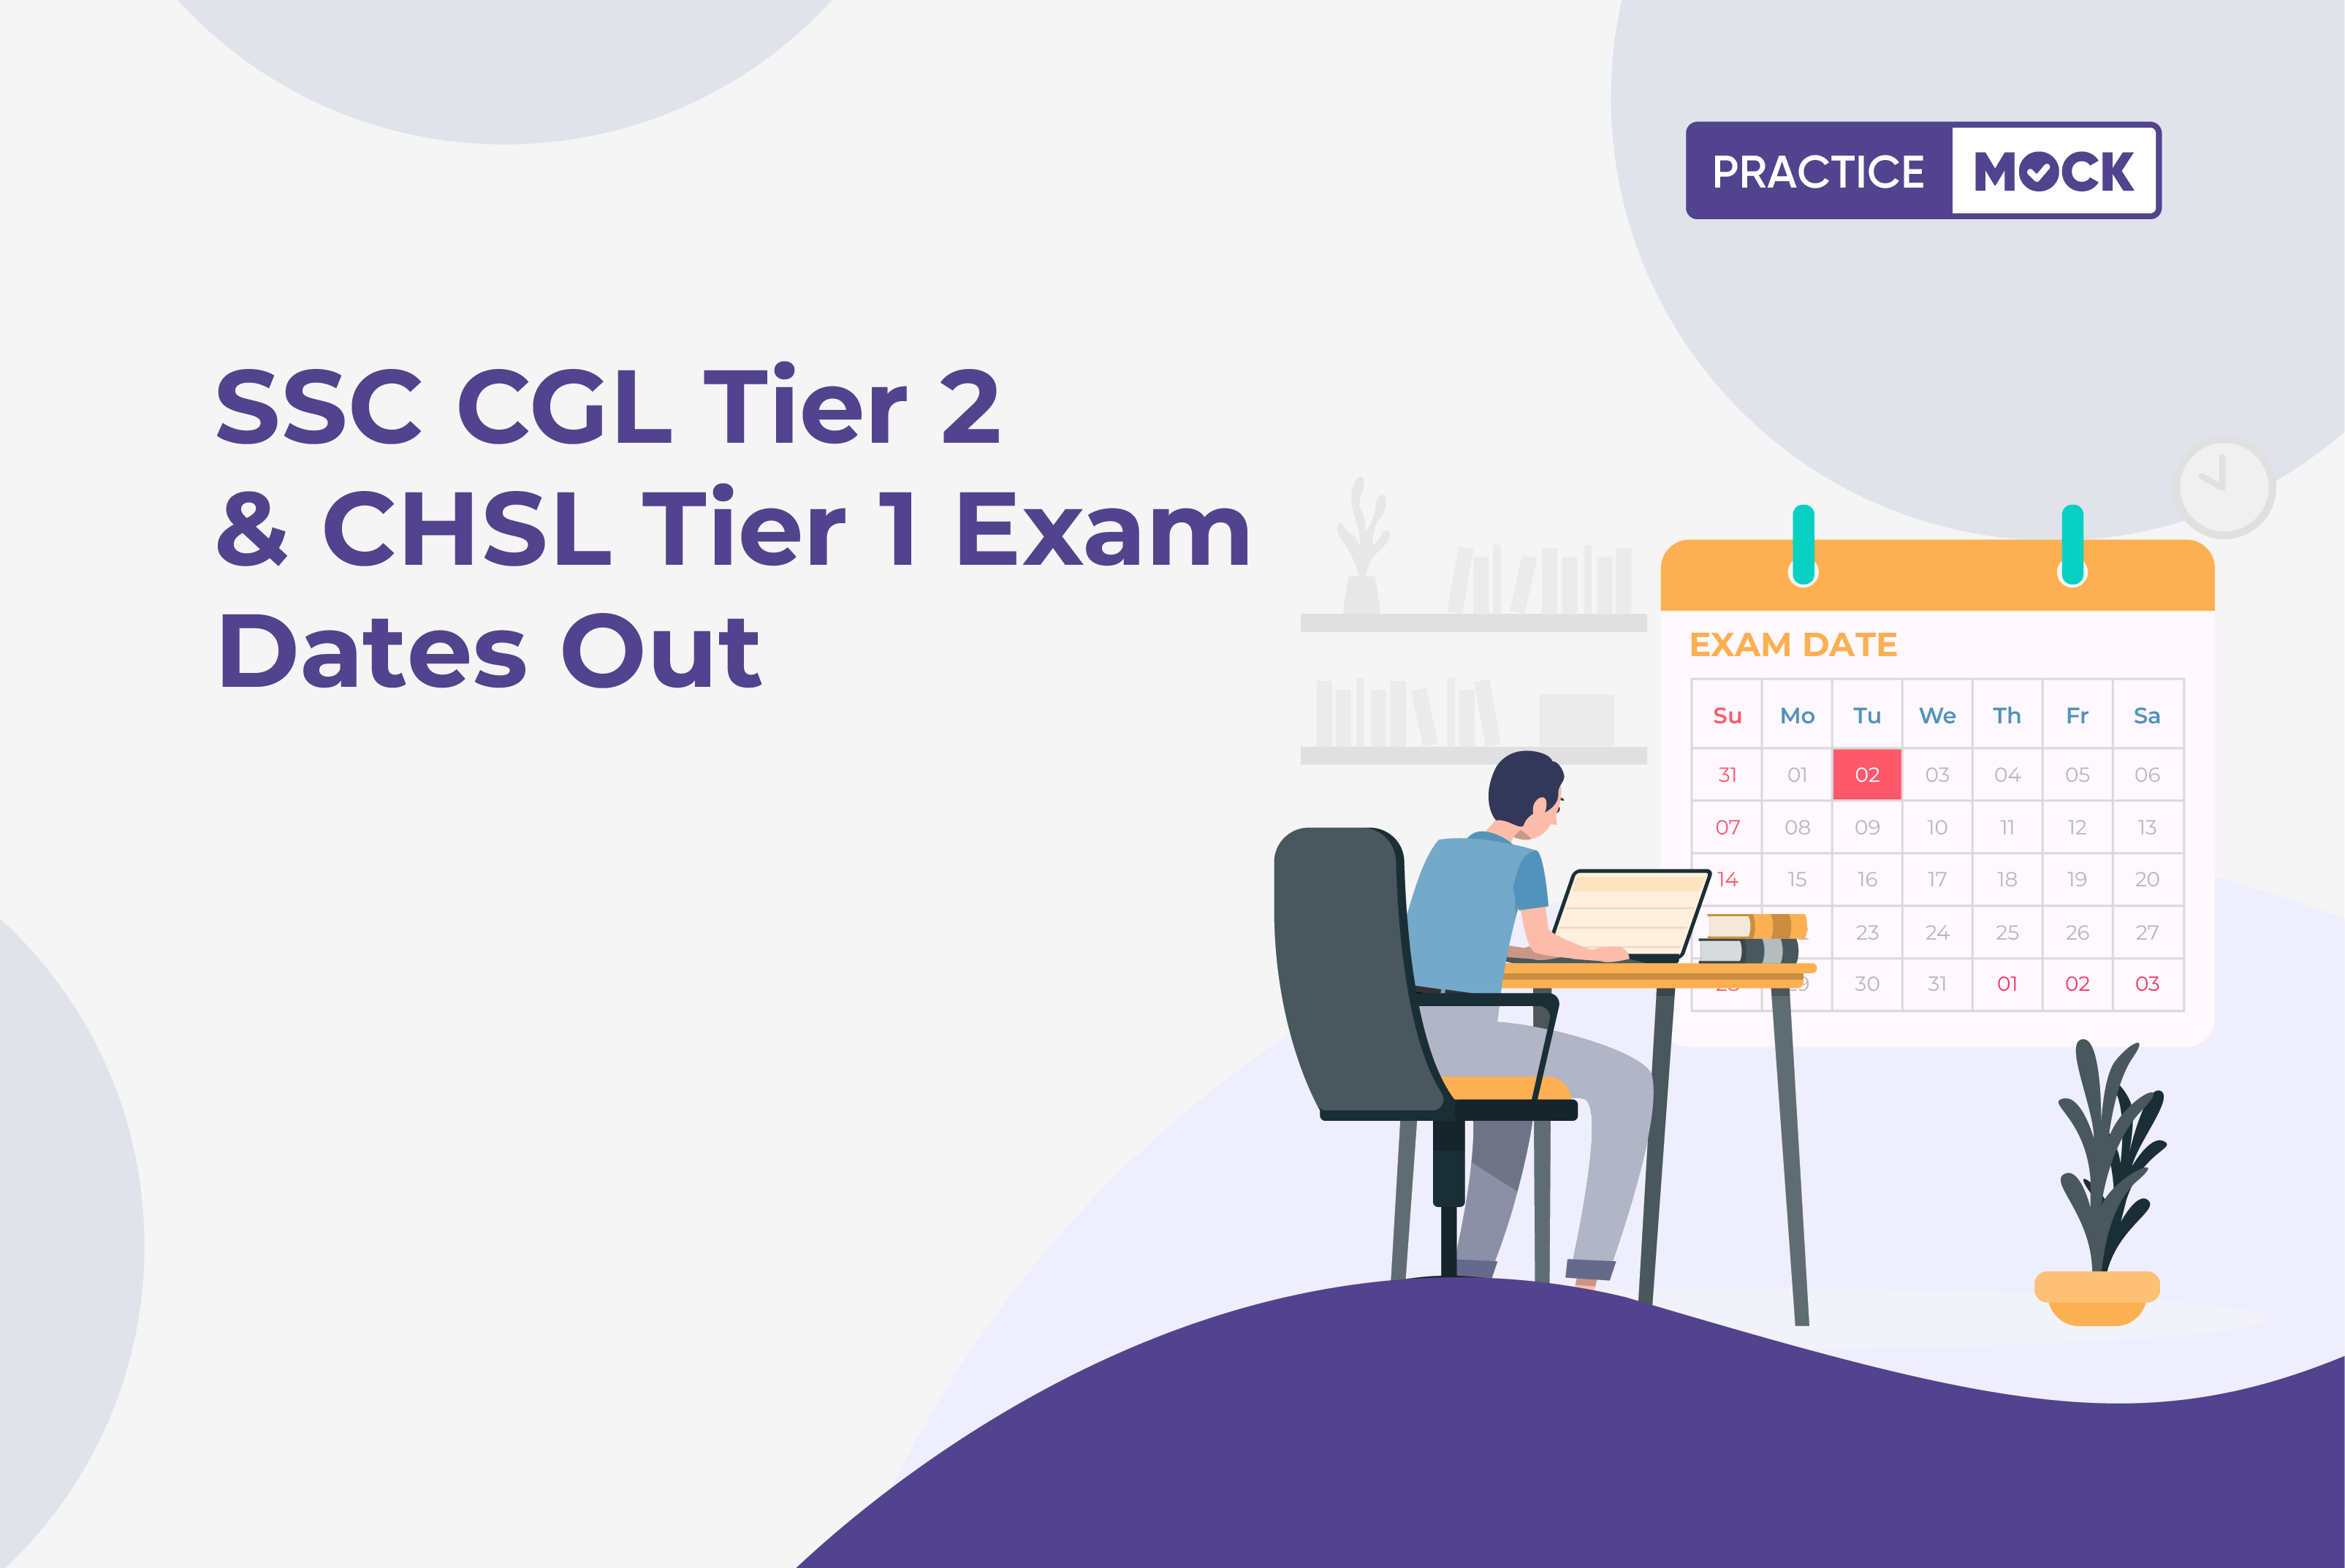 SSC CGL Tier 2 & CHSL Tier 1 Exam Dates Out